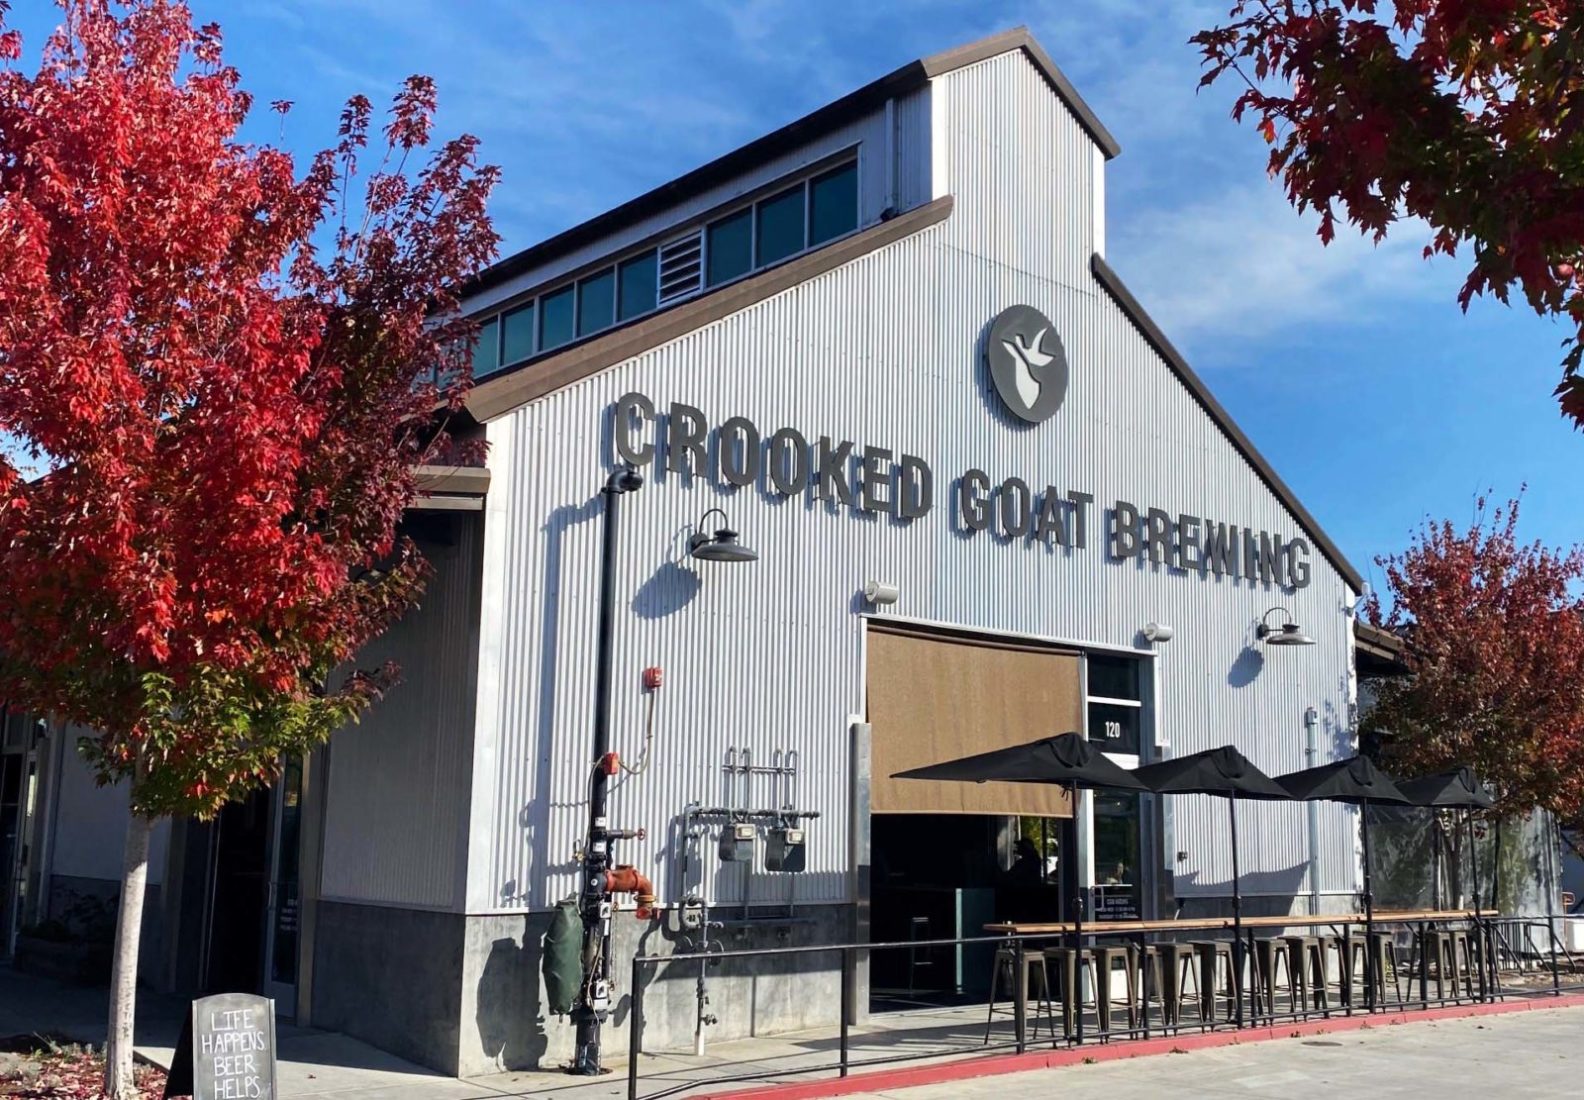 563. Crooked Goat Brewing Co, Sebastapol CA, 2022